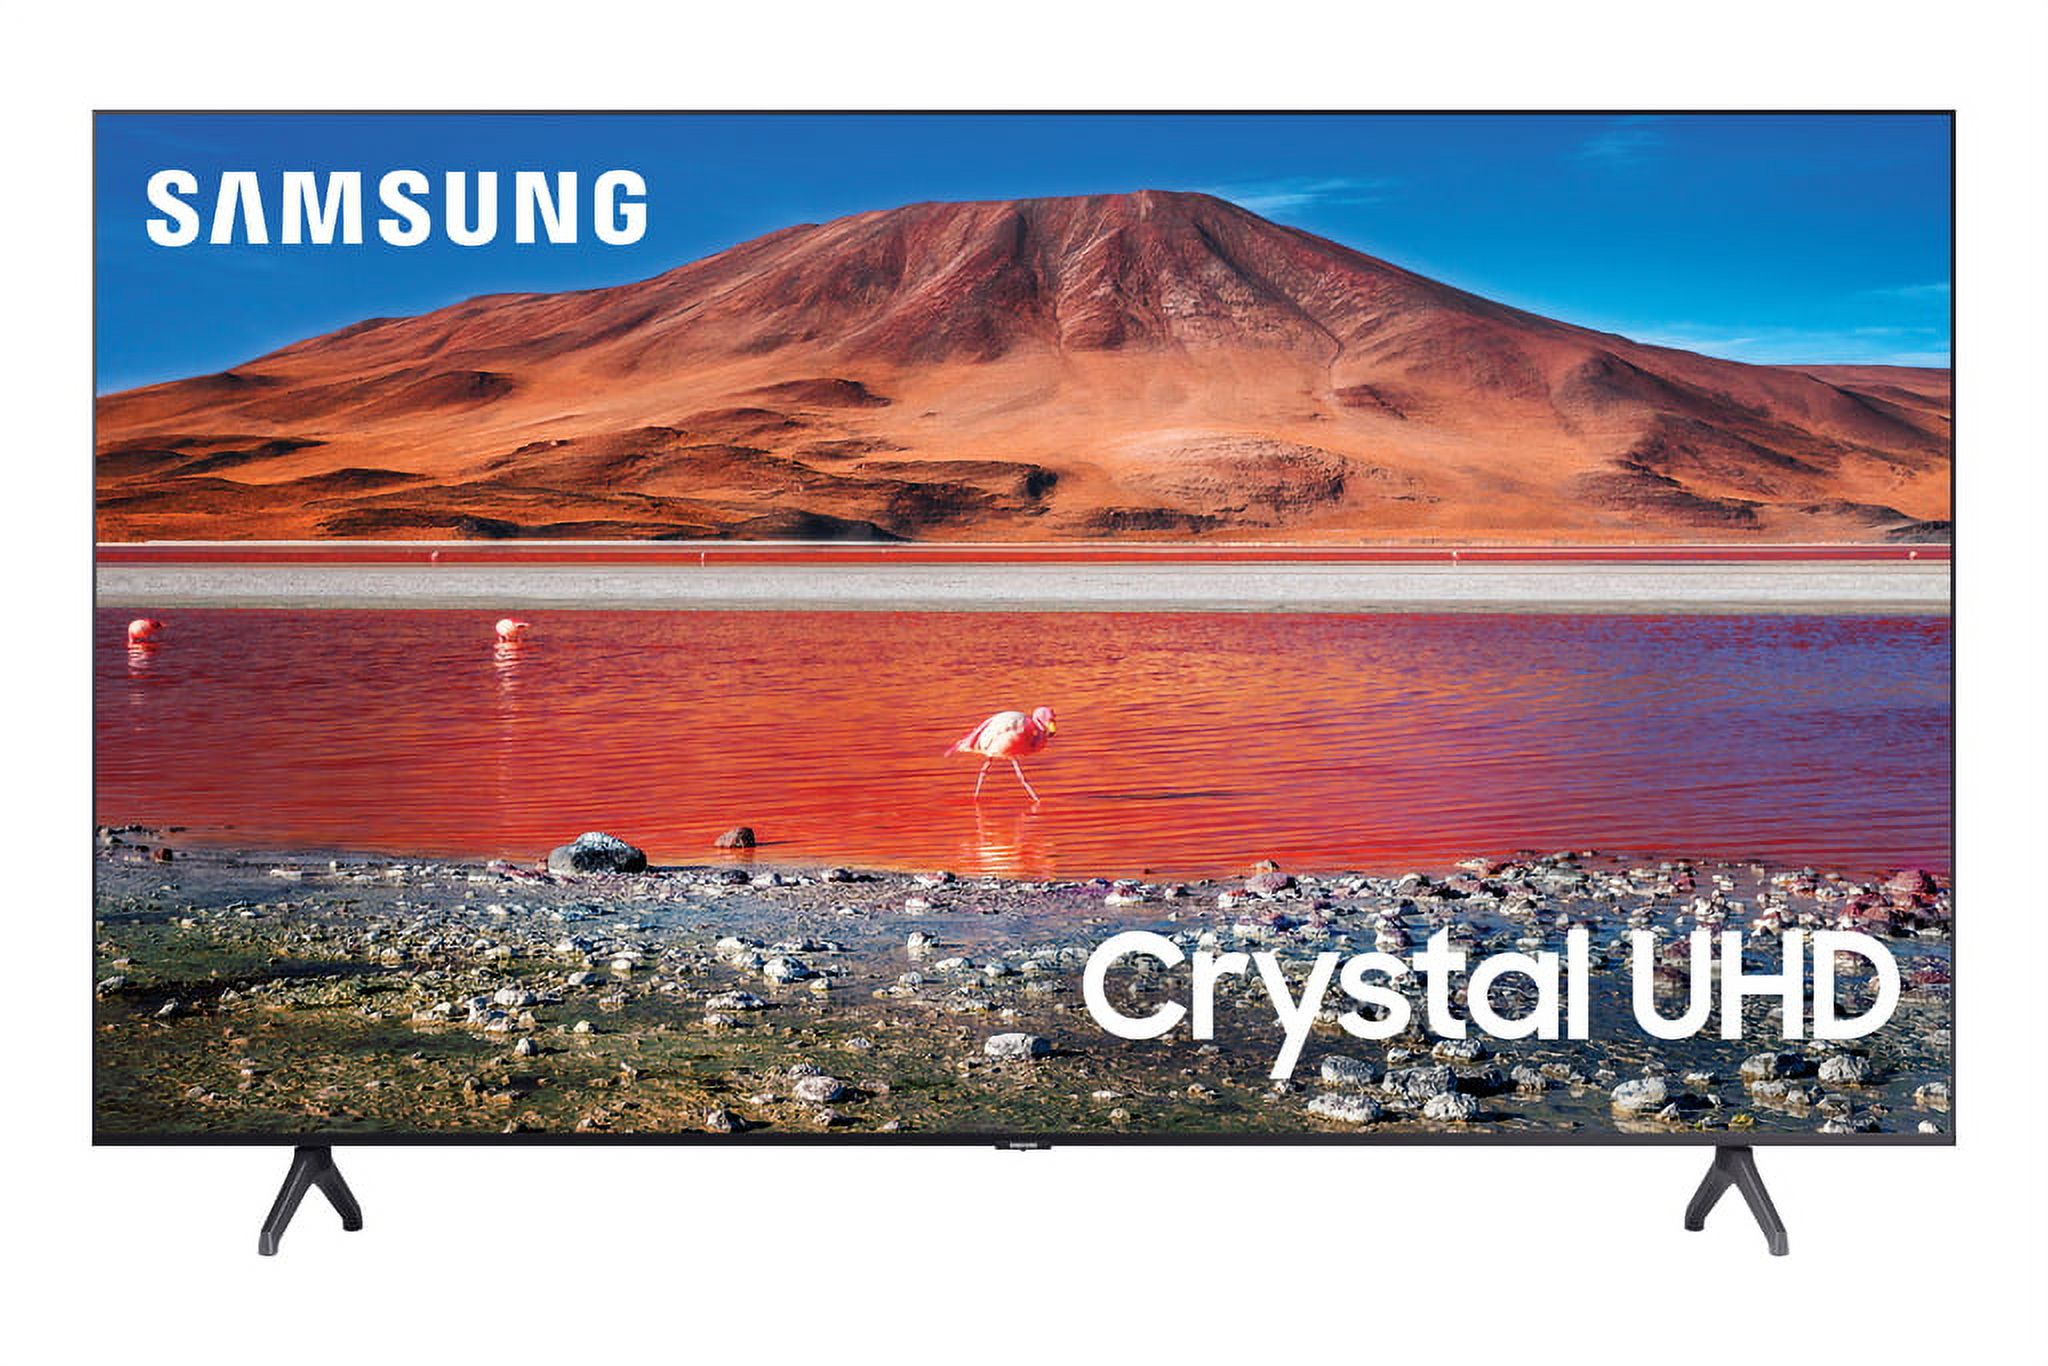 SAMSUNG 65" Class 4K Crystal UHD (2160P) LED Smart TV with HDR UN65TU7000B - image 1 of 5